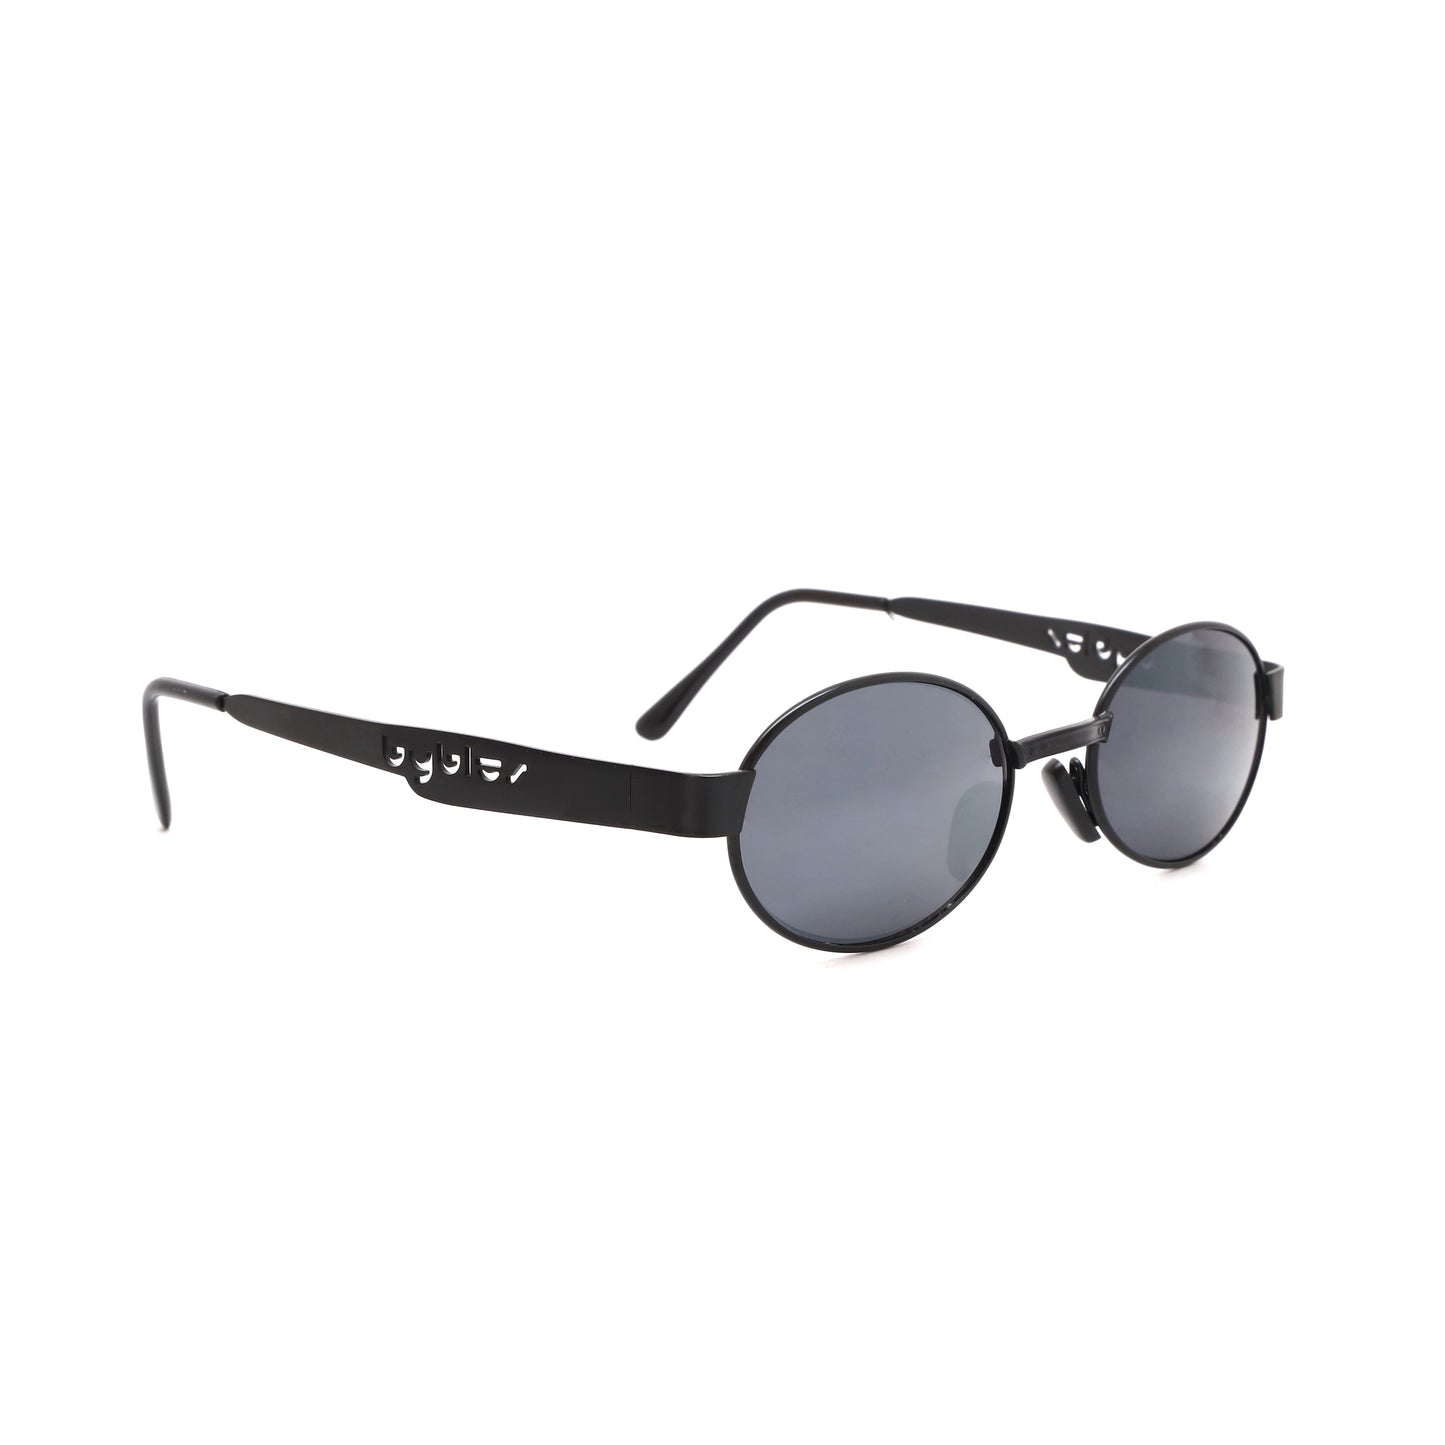 Deadstock Vintage Standard Size Santa Fe Oval Sunglasses - Black